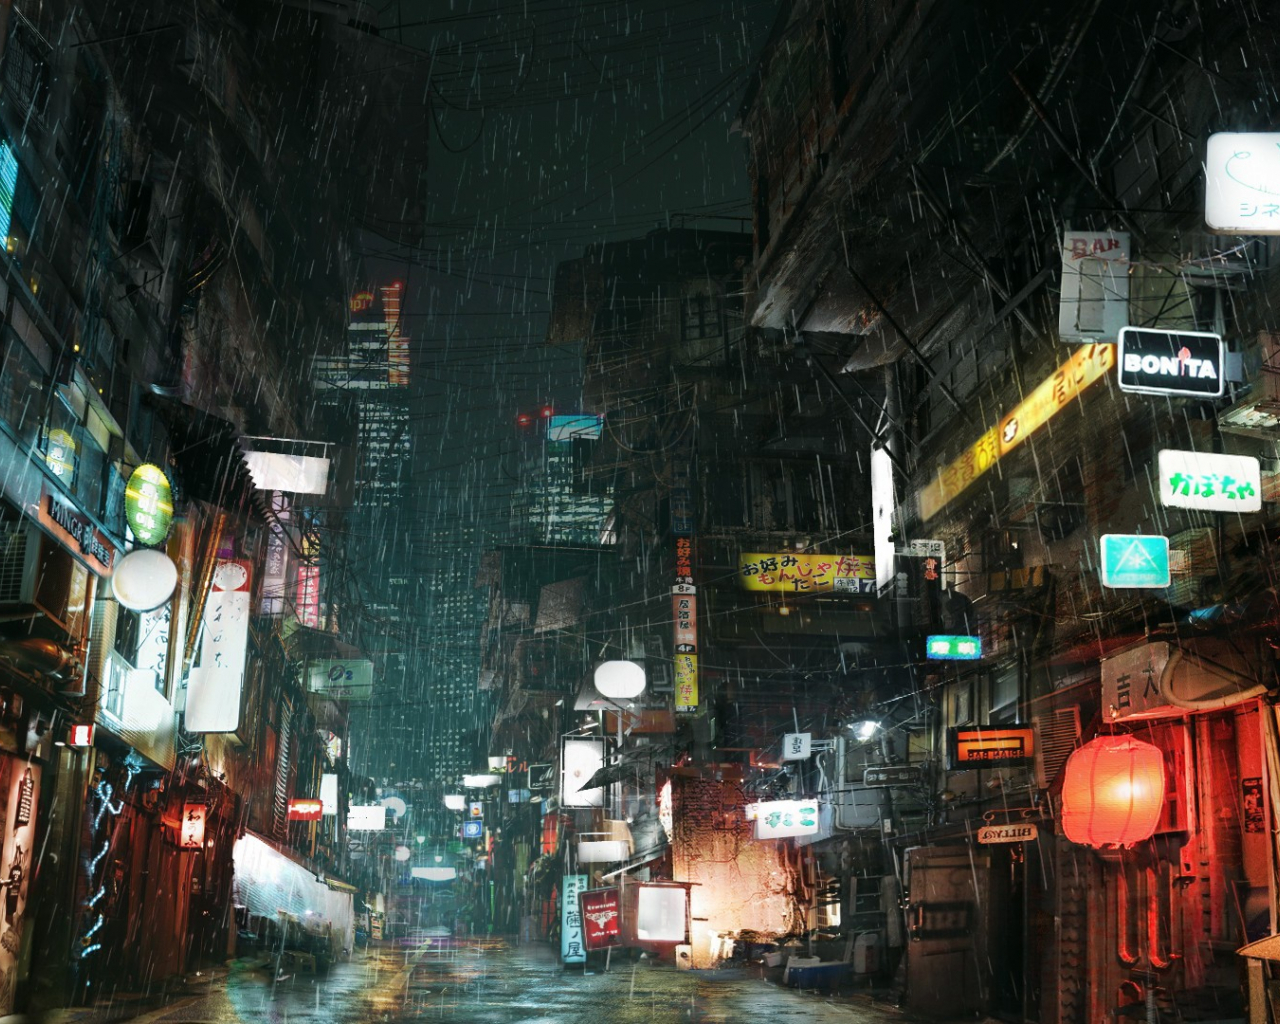 Anime City Rain Wallpapers